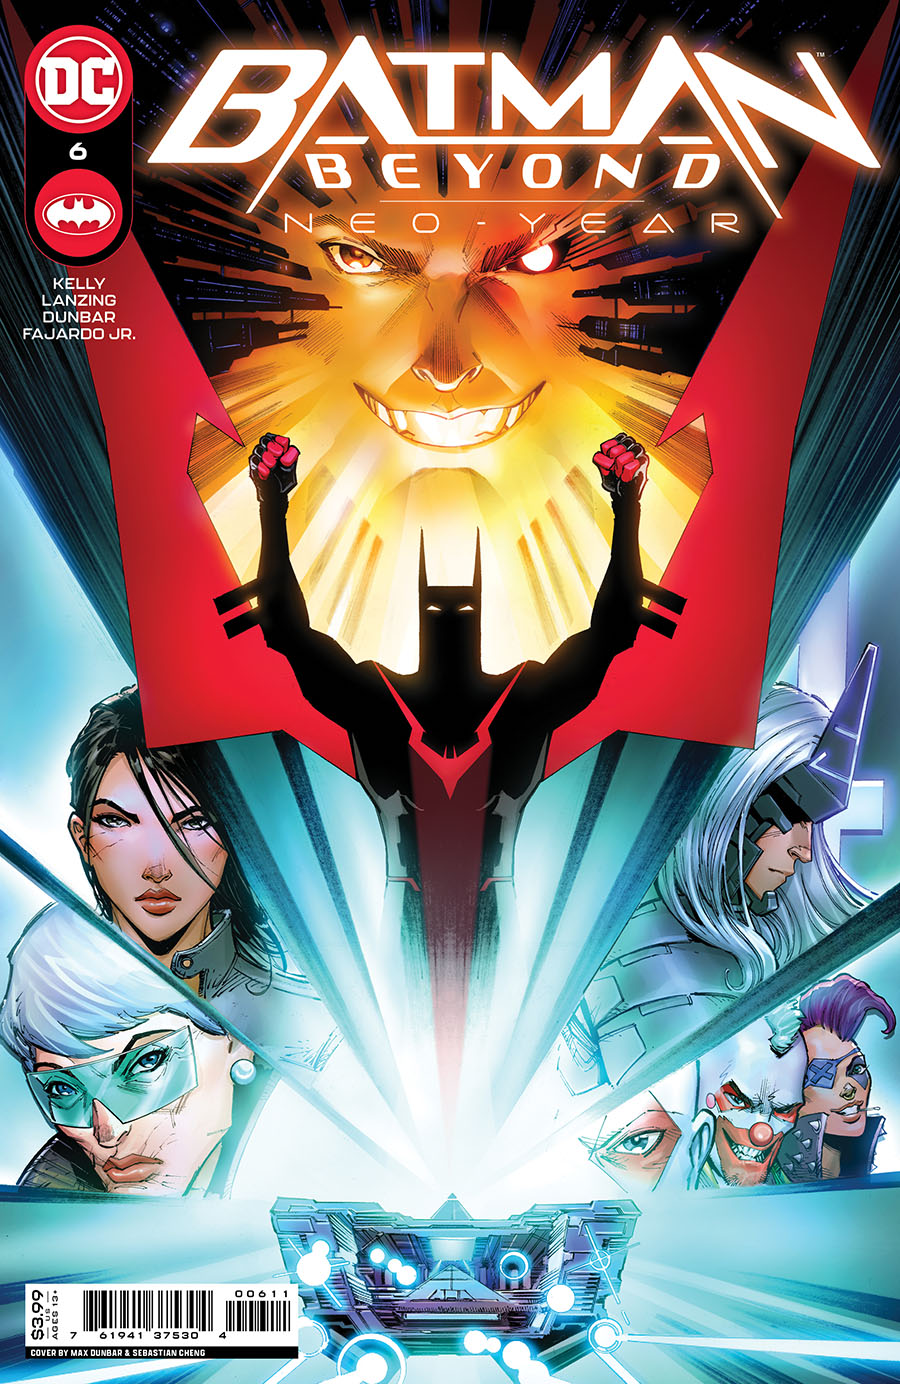 Batman Beyond Neo-Year #6 Cover A Regular Max Dunbar Cover